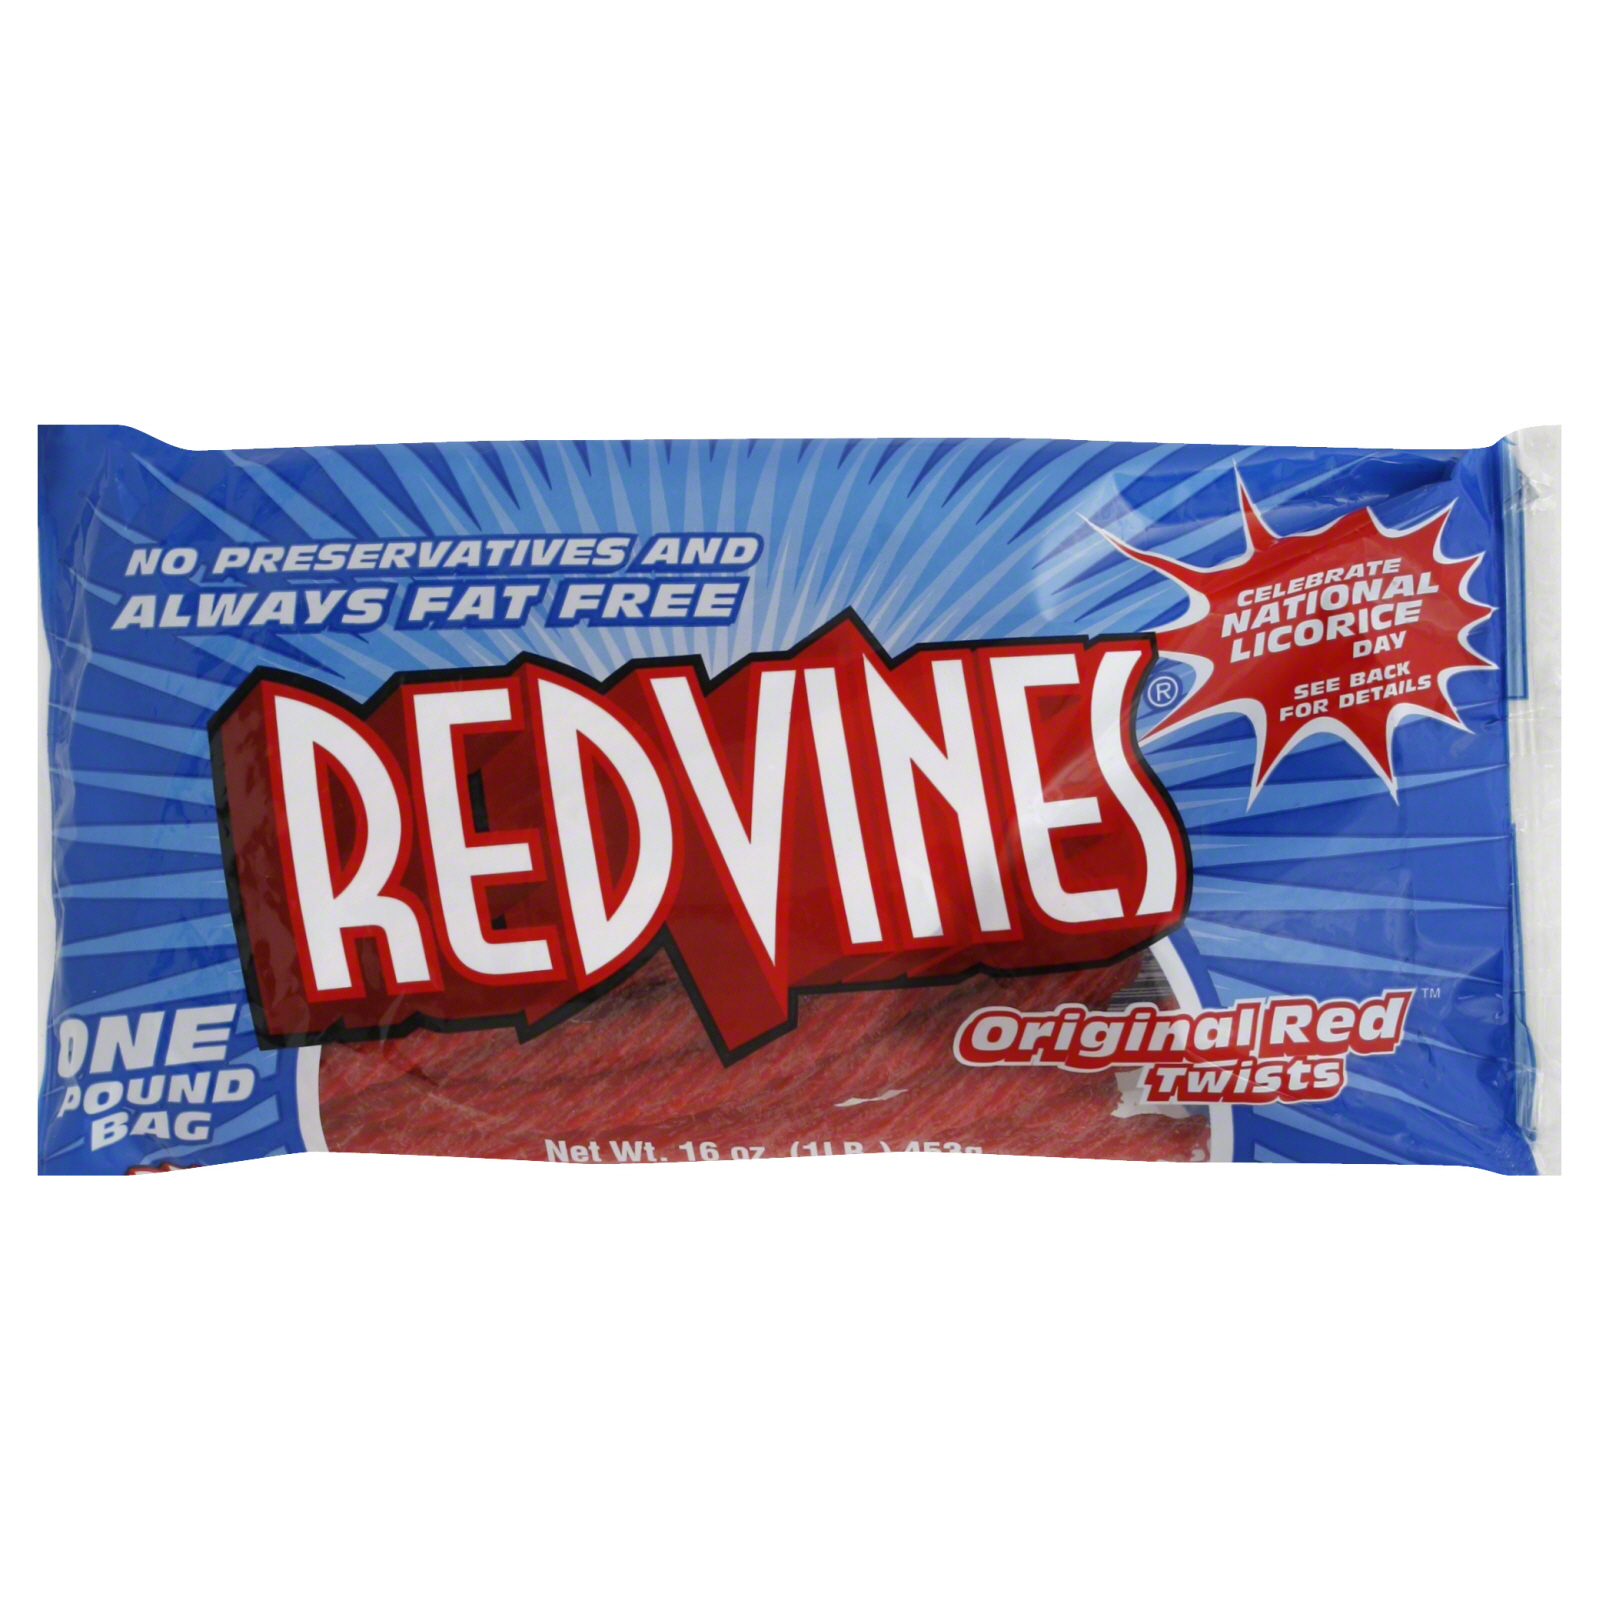 Red Vines Twists, Original Red, 16 oz (1 lb) 453 g